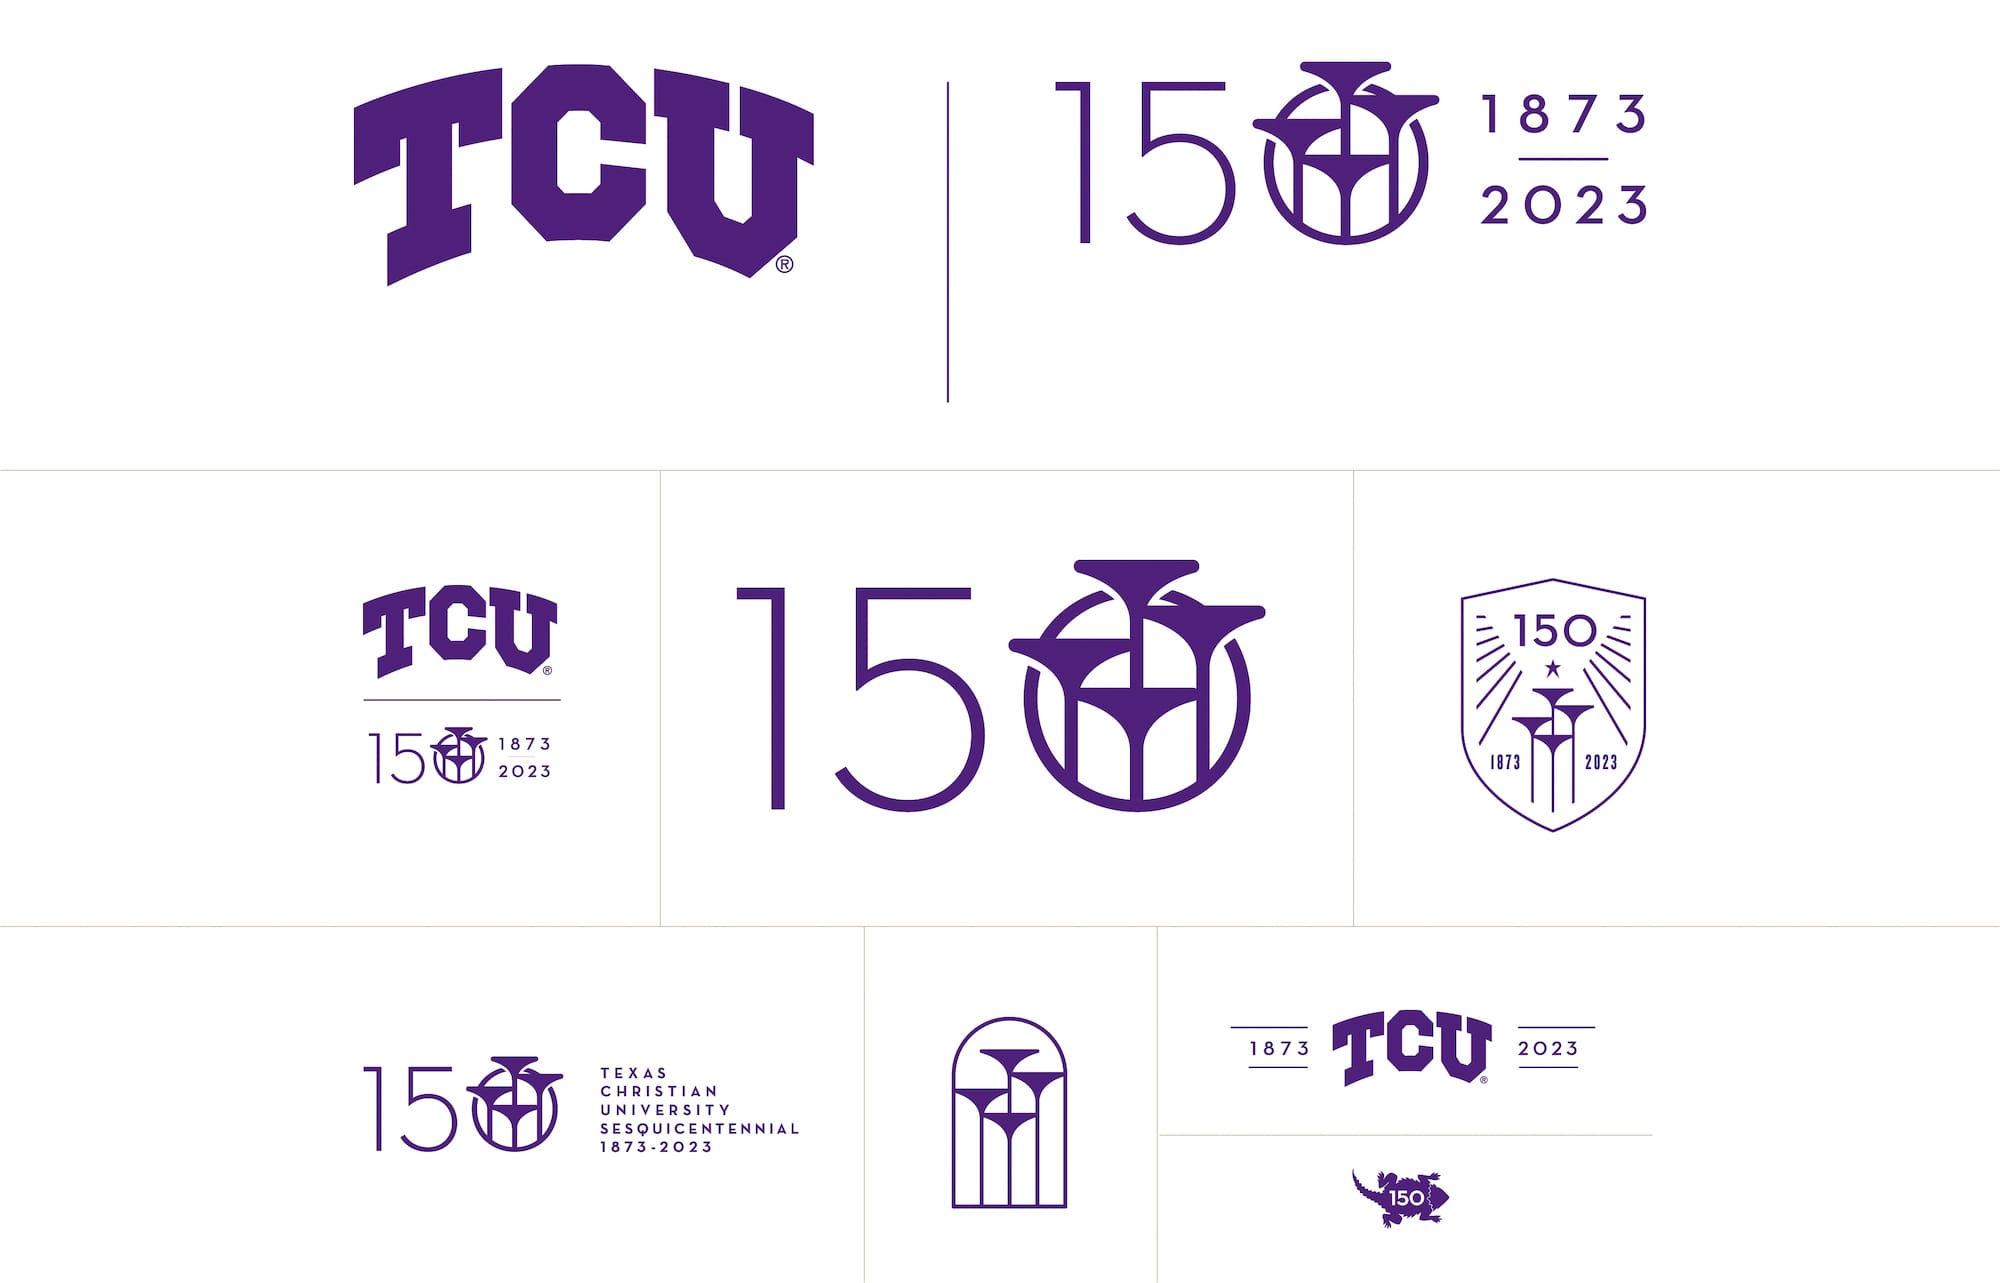 TCU 150th anniversary logos